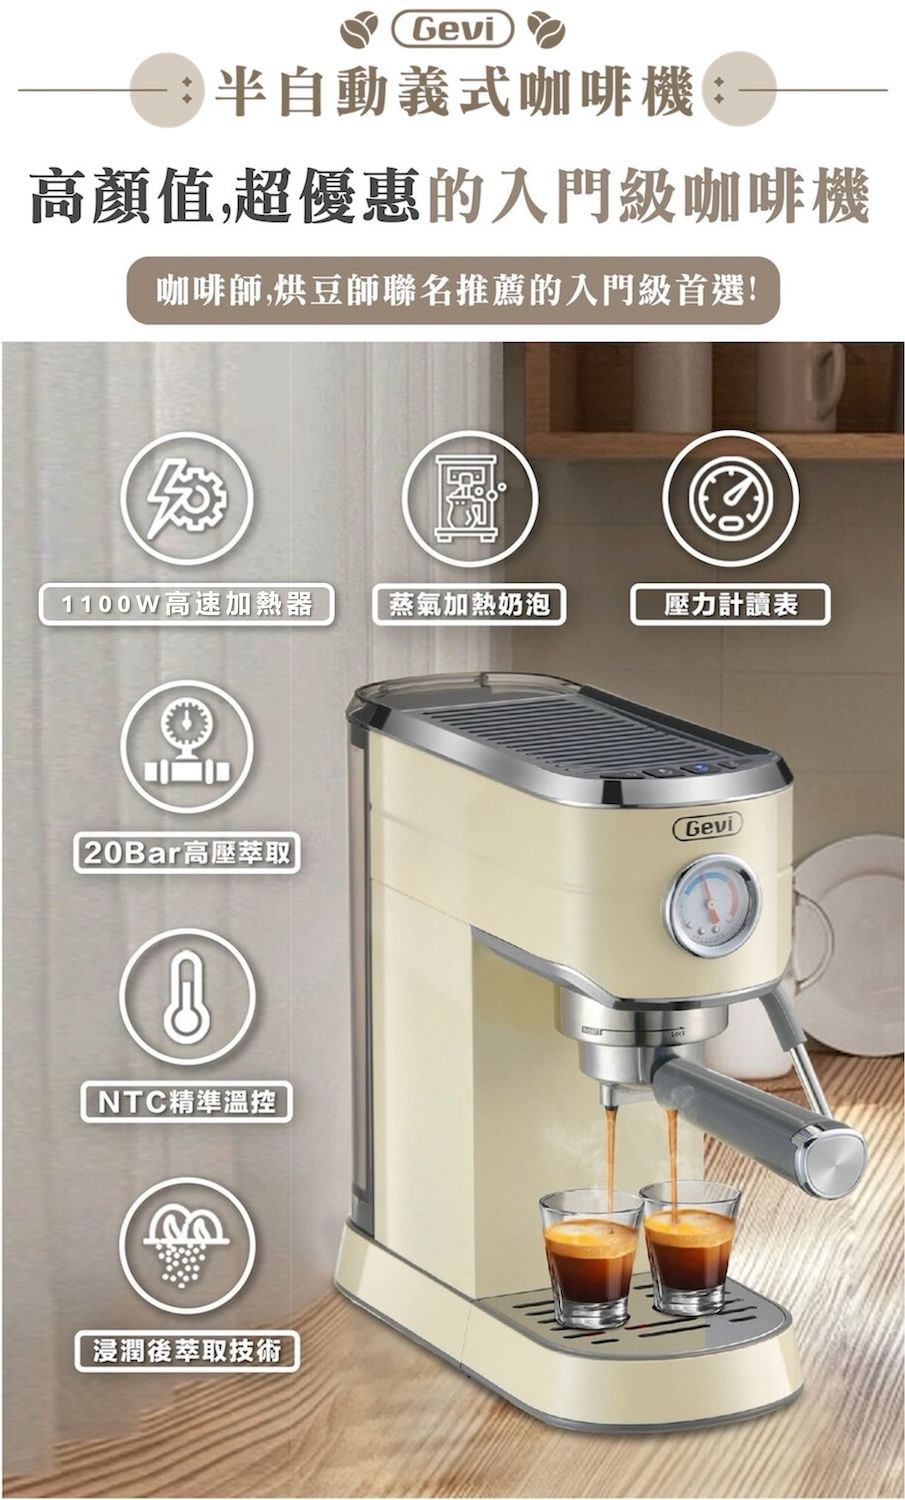 Gevi半自動義式咖啡機:高顏值,超優惠的入門級咖啡機咖啡師,烘豆師聯名推薦的入門級首選!1100W高速加熱器蒸氣加熱奶泡壓力計讀表20Bar高壓萃取GeviNTC精準溫控浸潤後萃取技術